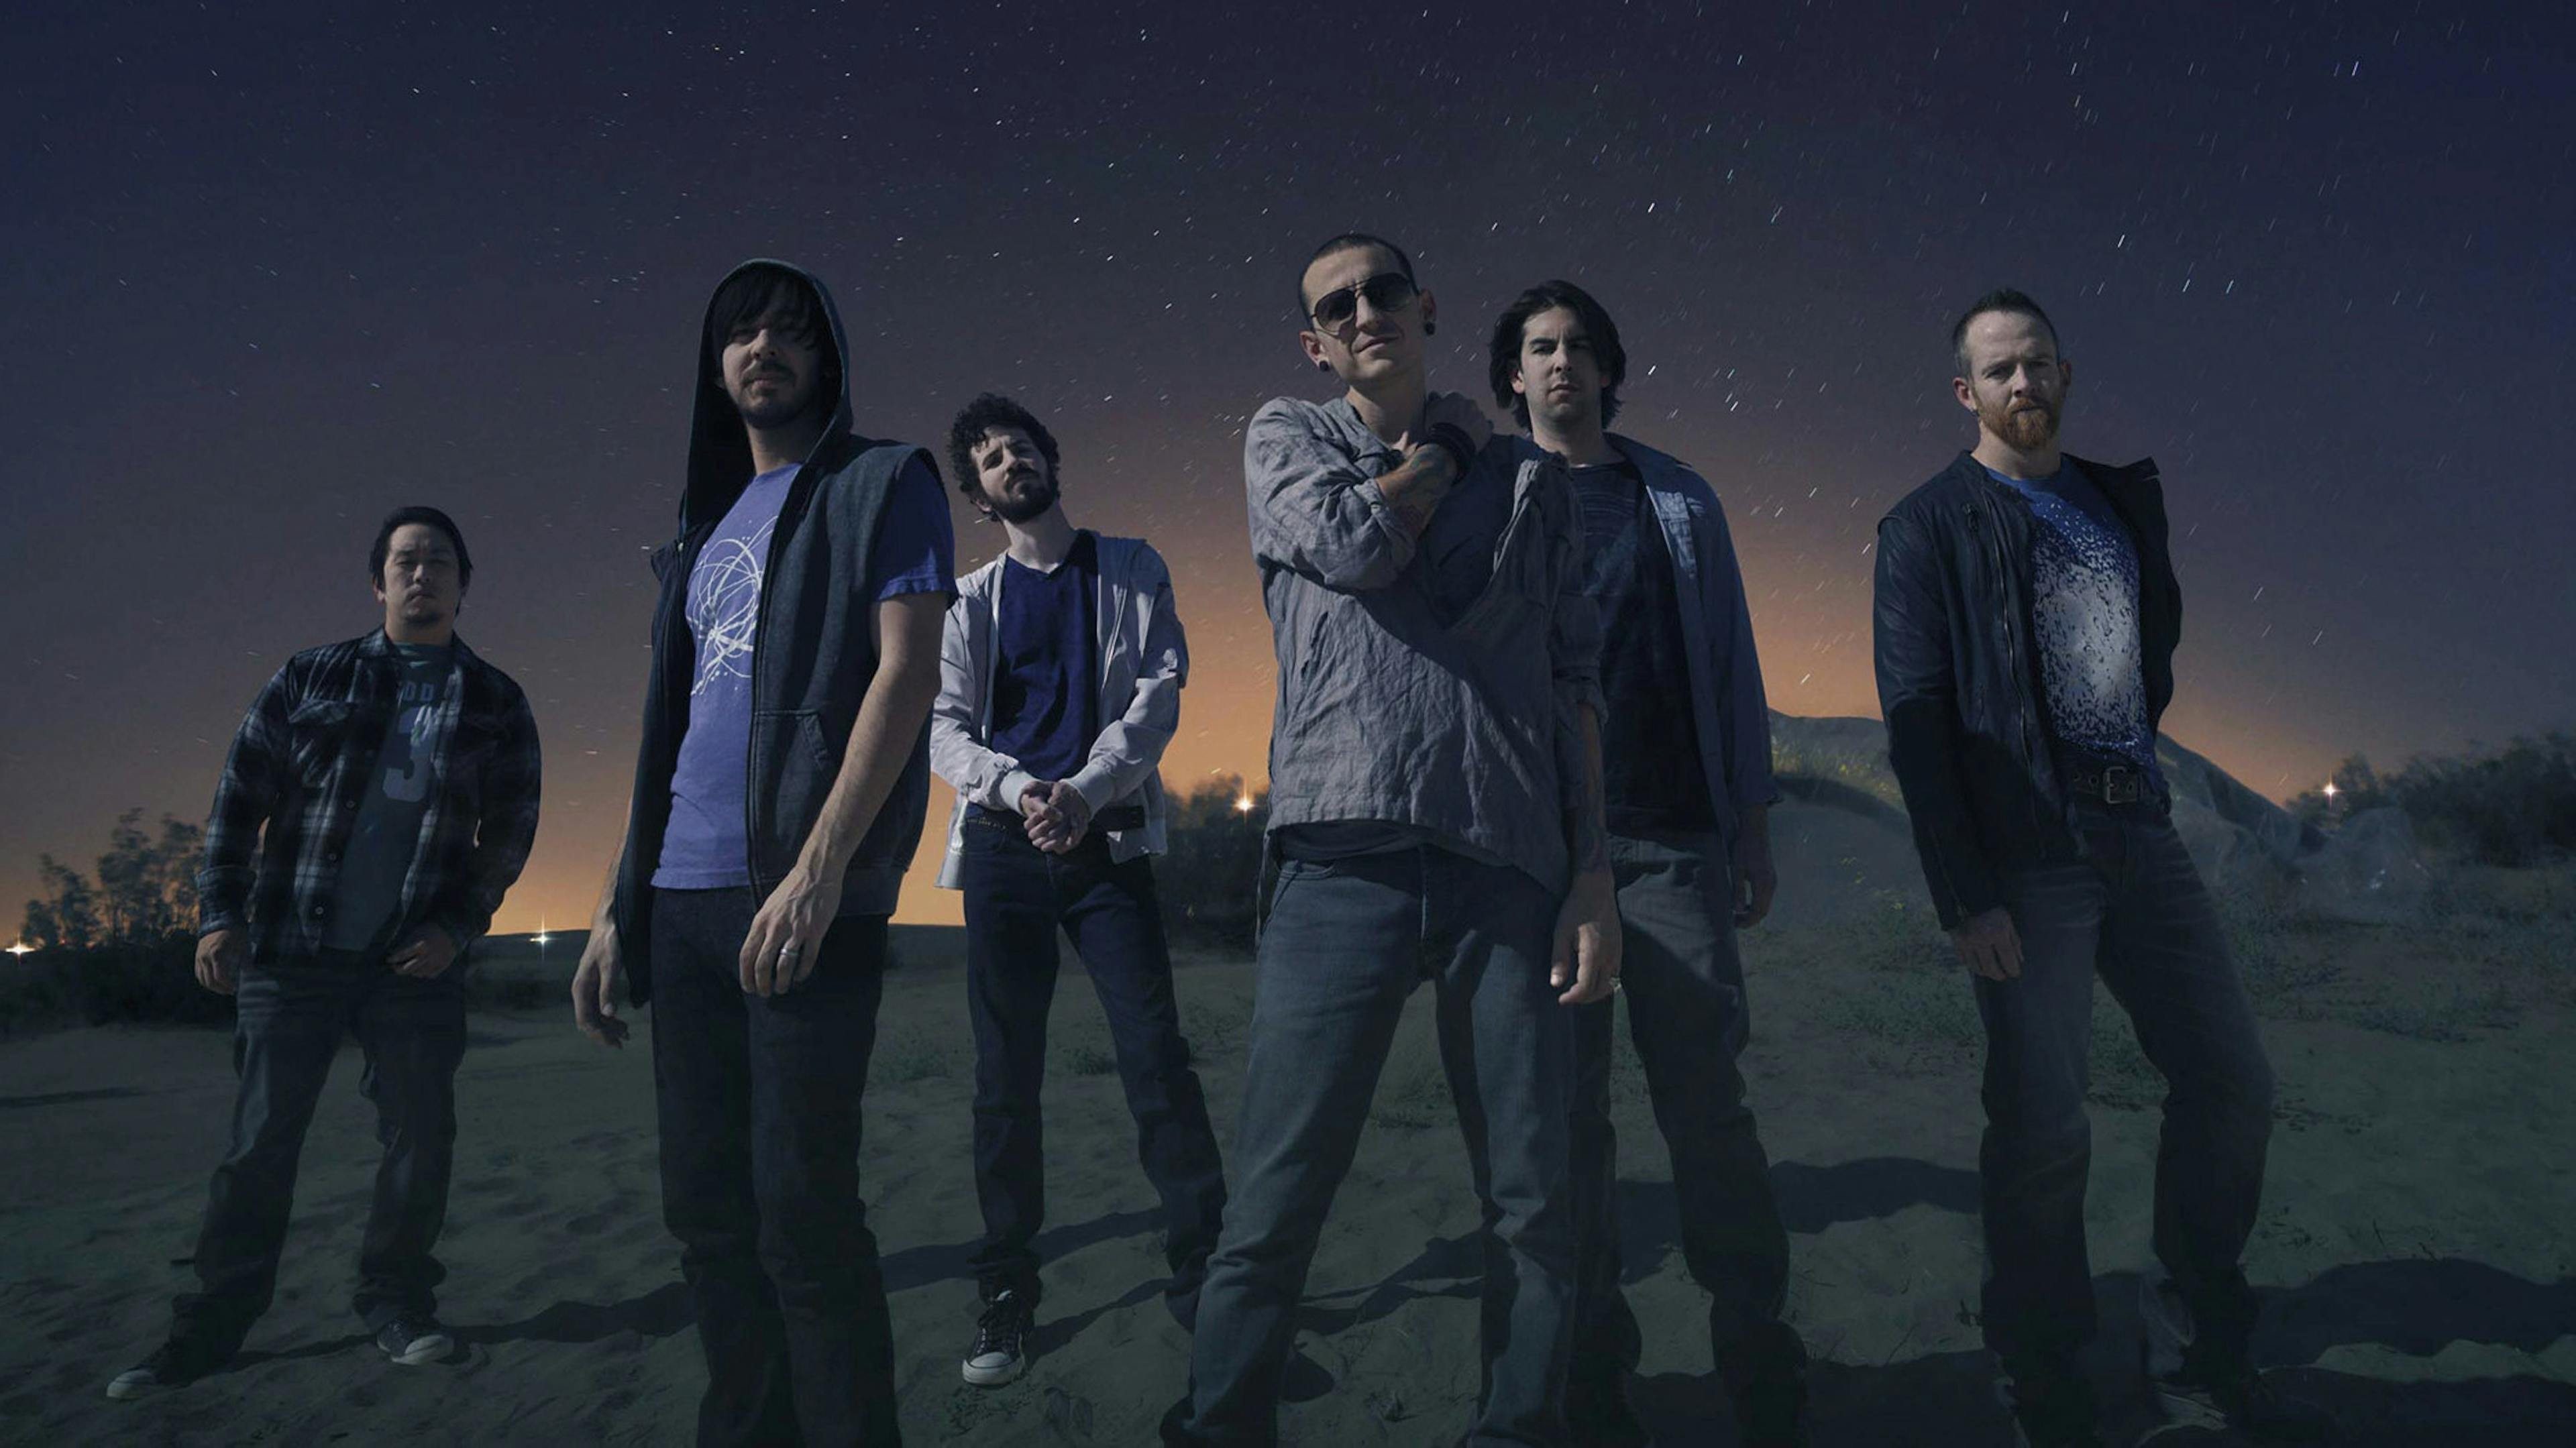 Mike Shinoda reflects on Linkin Park's most "polarising" album